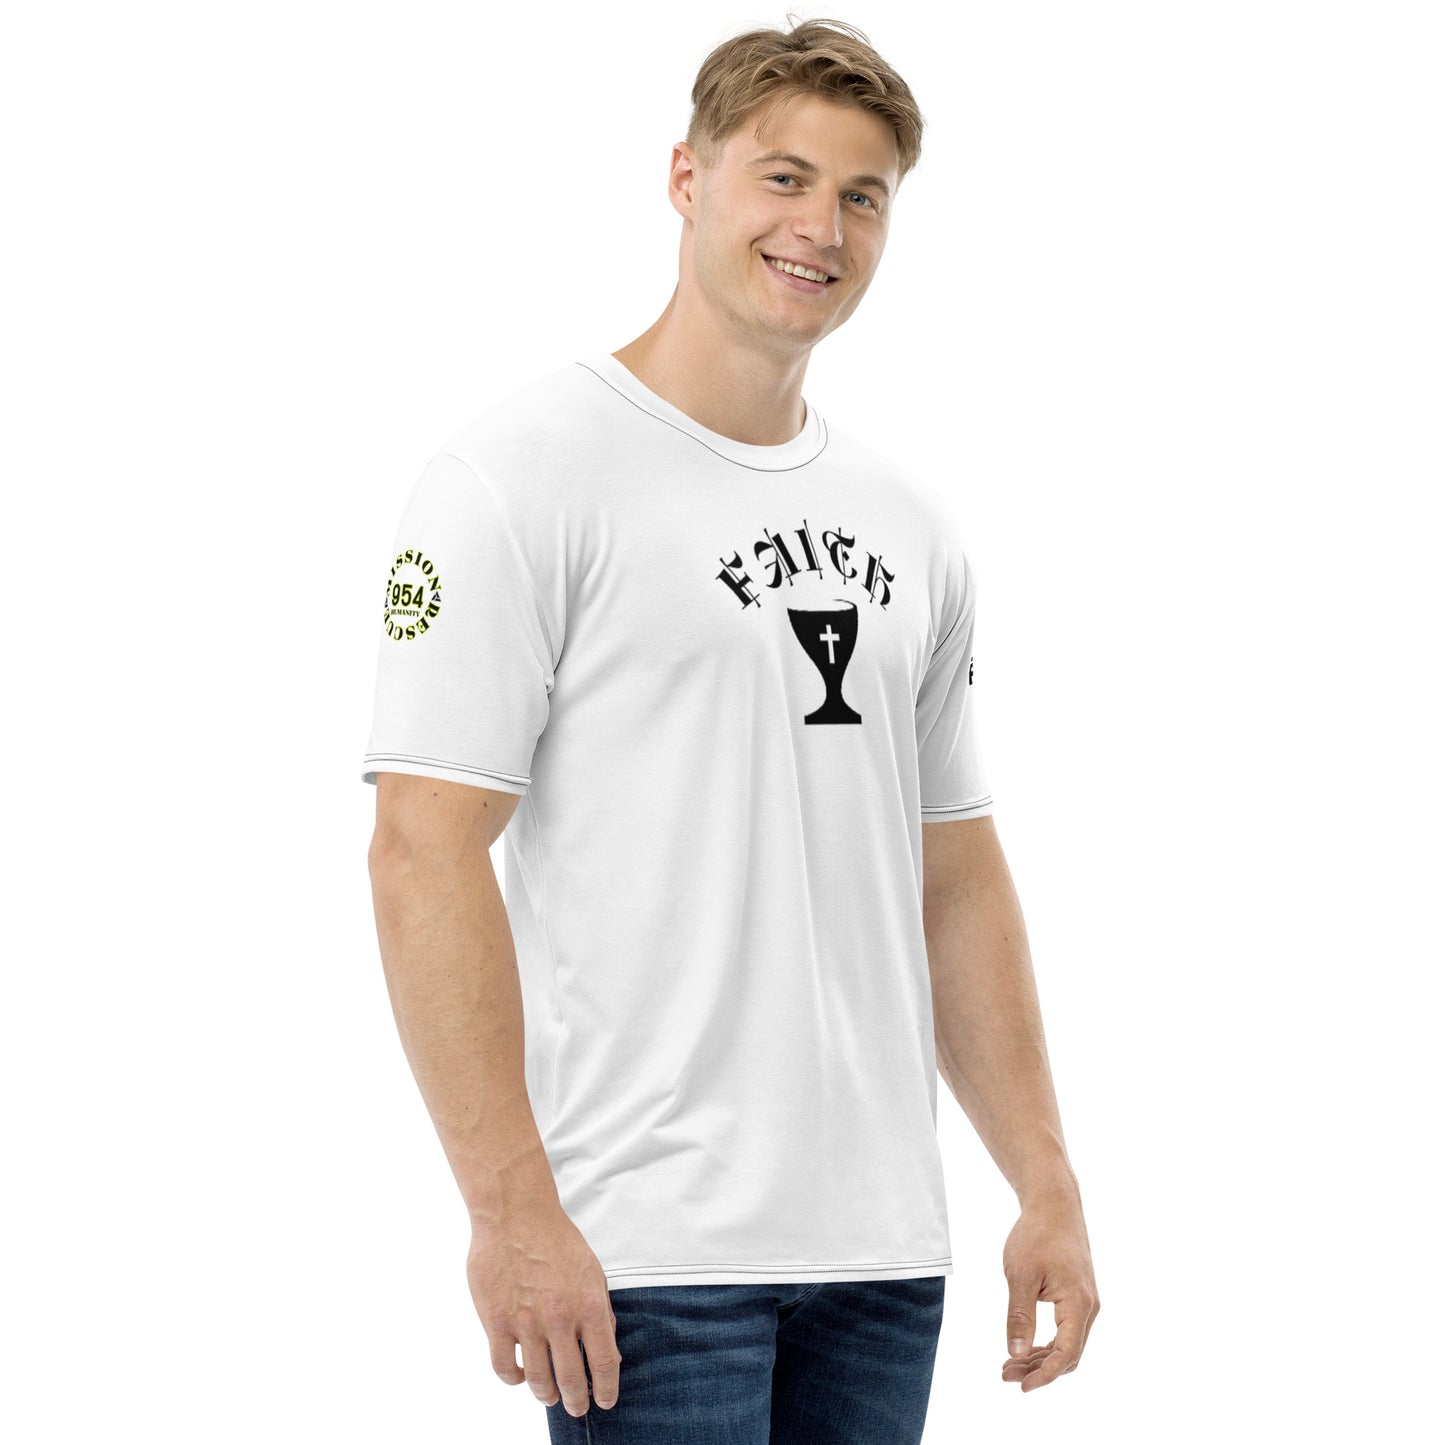 Faith V 954 Men's t-shirt